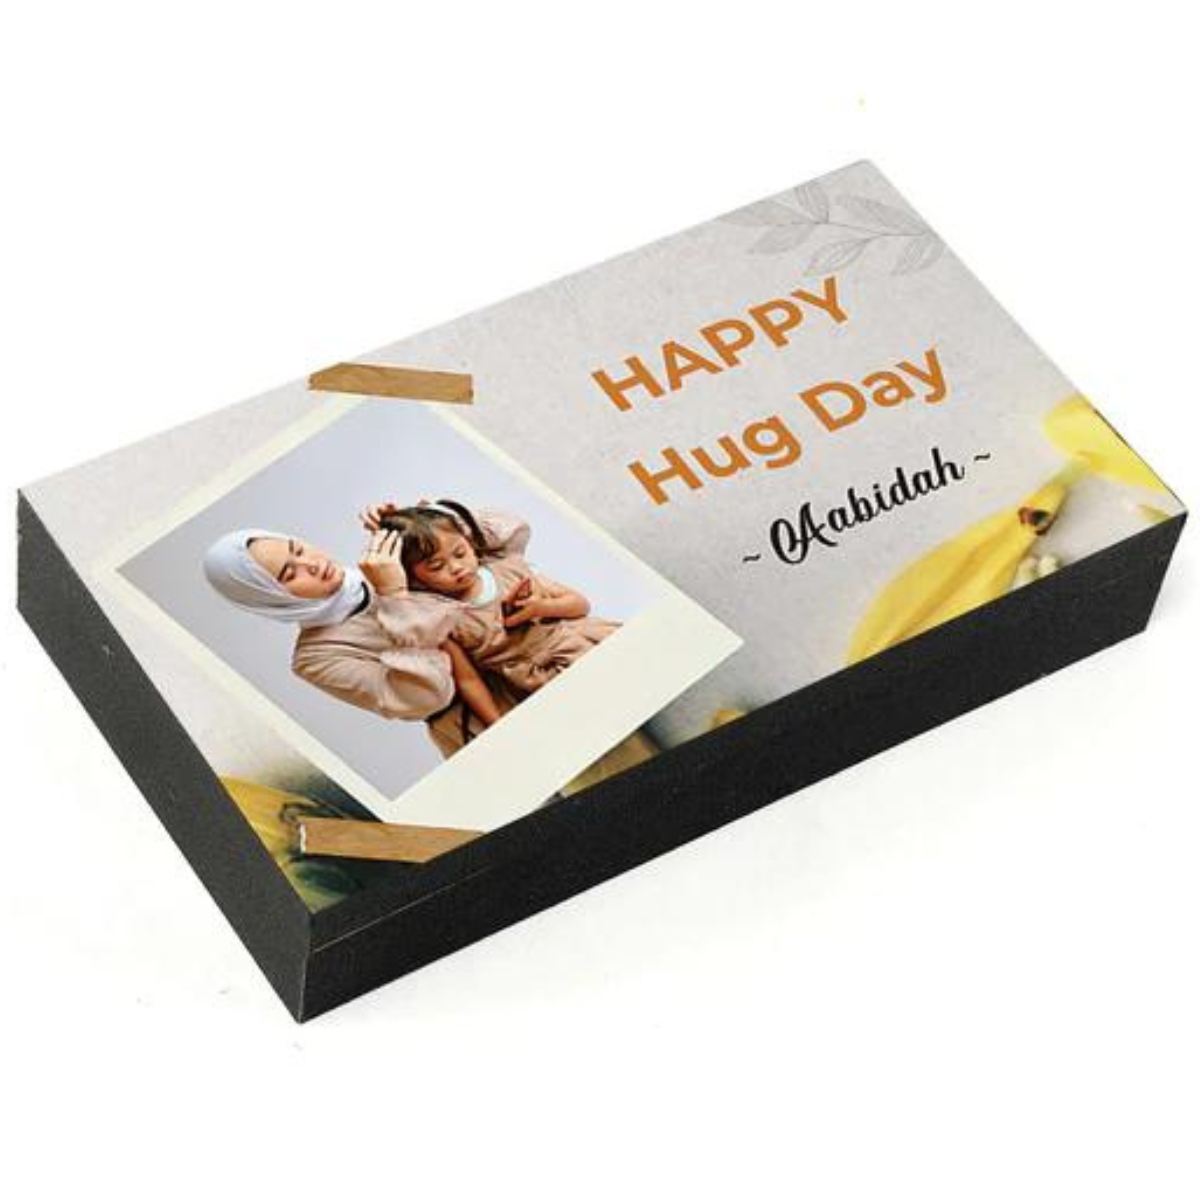 Personalised Hug Day Photo Chocolate